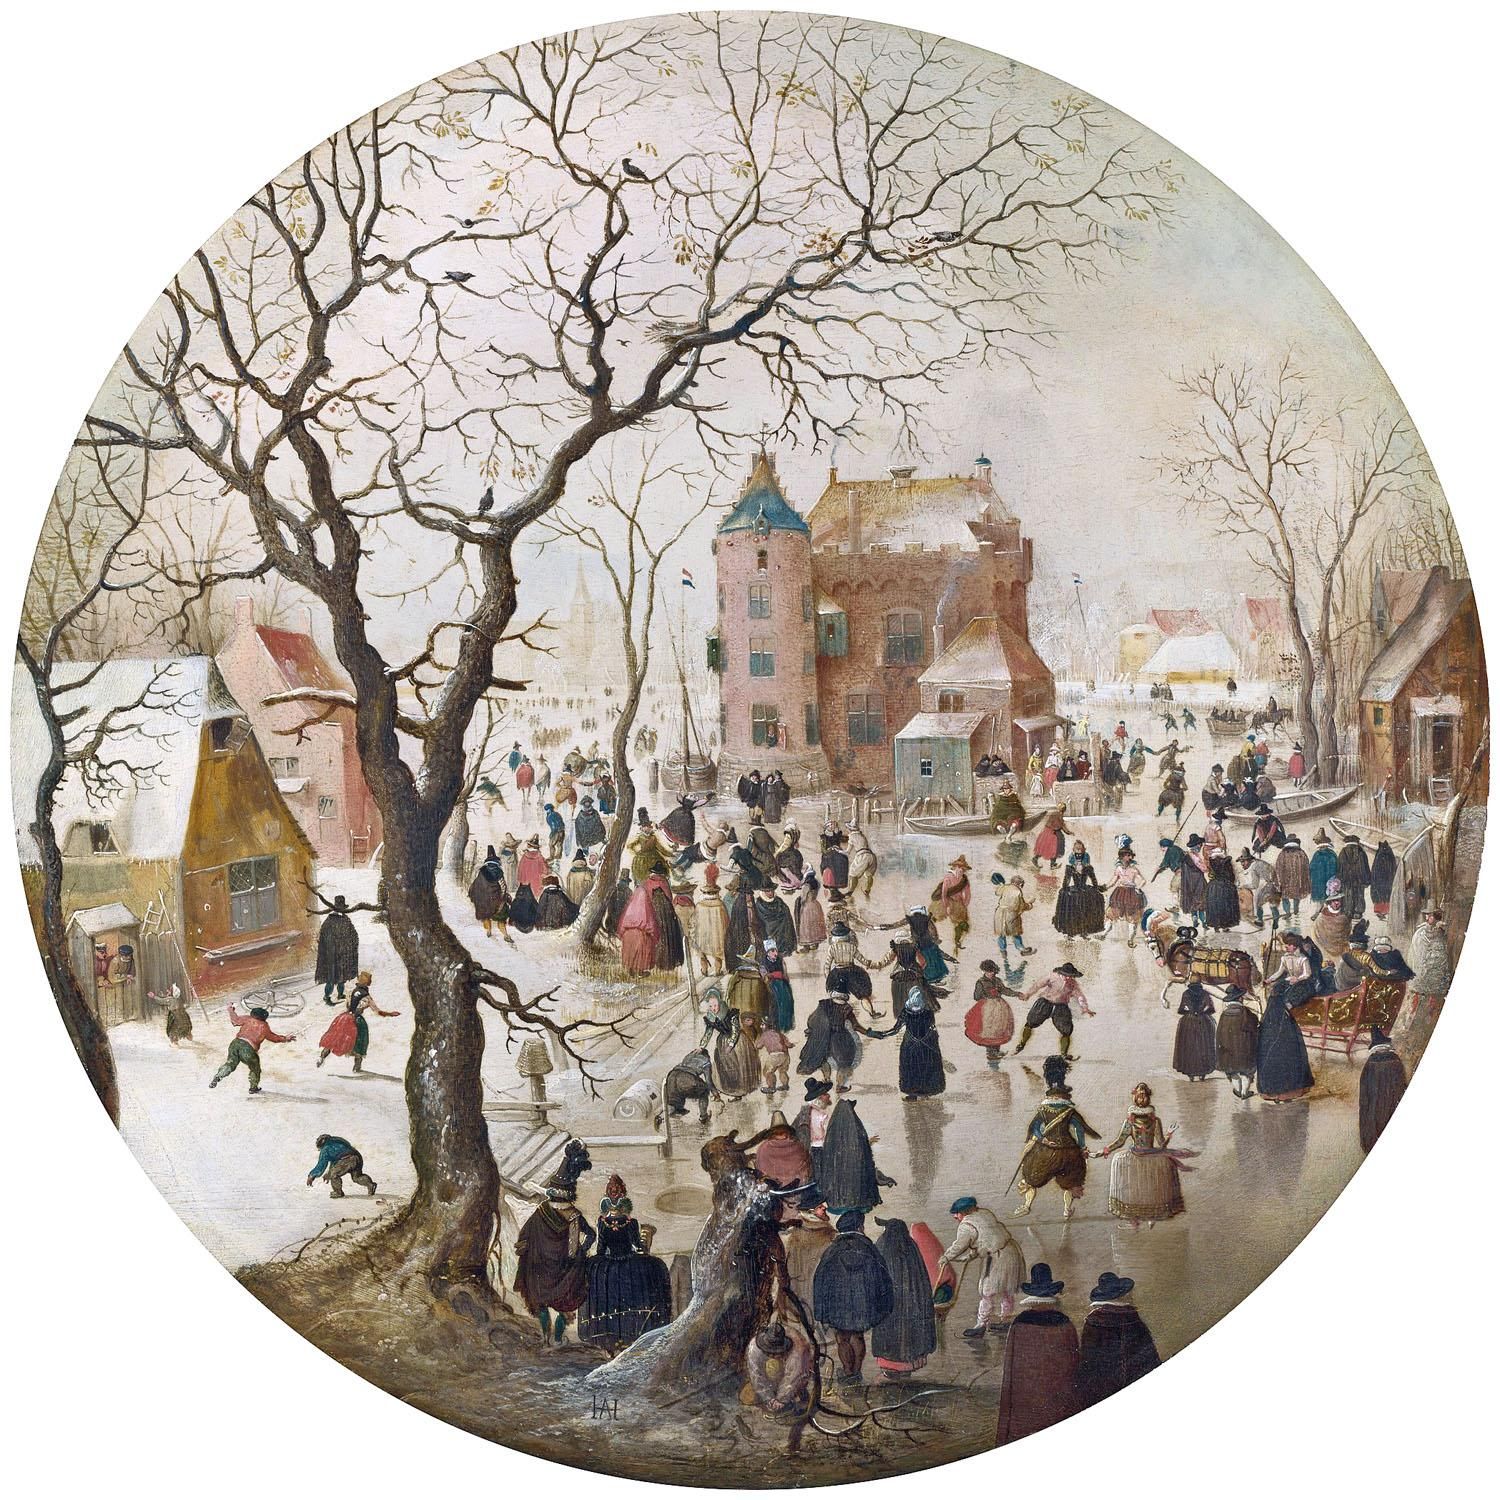 Hendrick Avercamp. A Winter Scene with Skaters near a Castle. 1608. National Gallery London